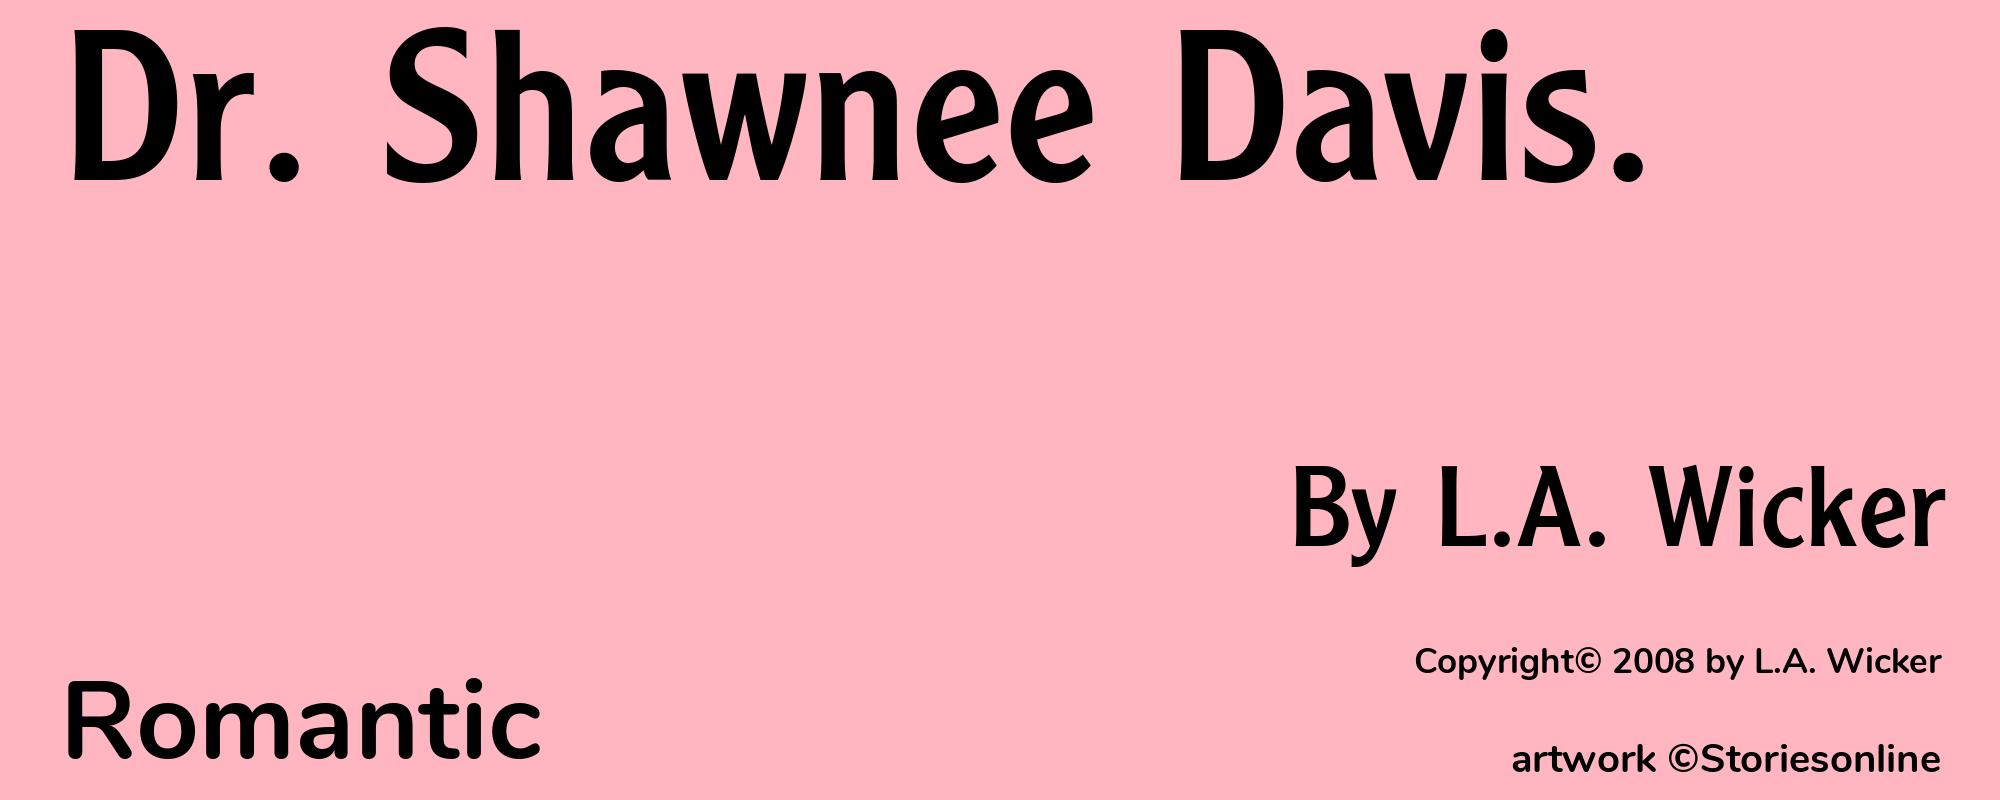 Dr. Shawnee Davis. - Cover